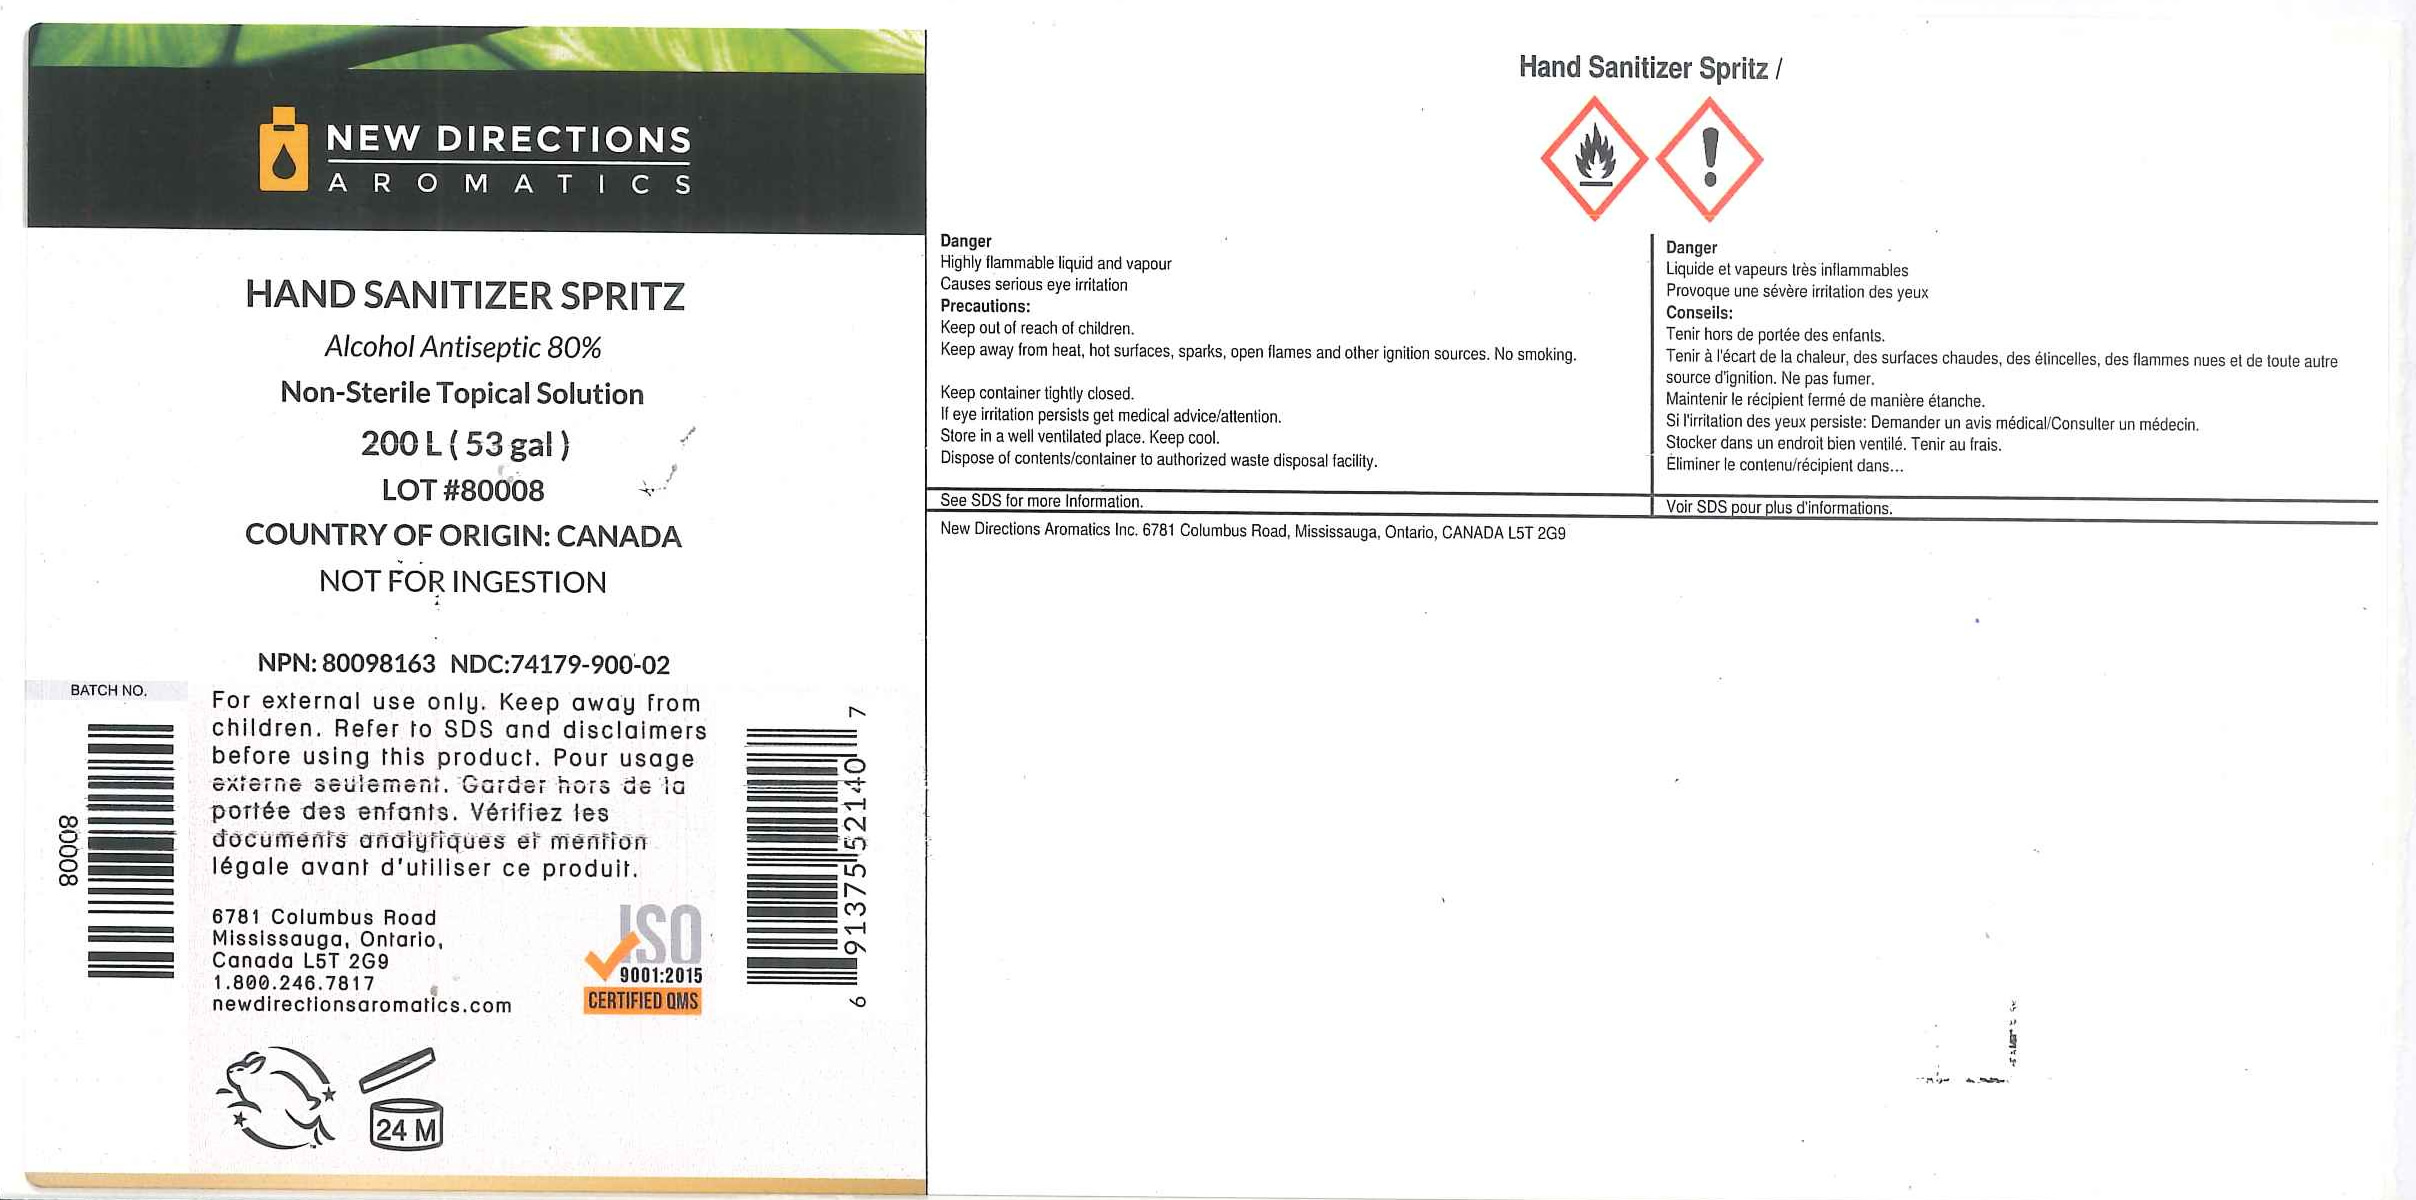 Hand Sanitizer Spritz - 200 L Label